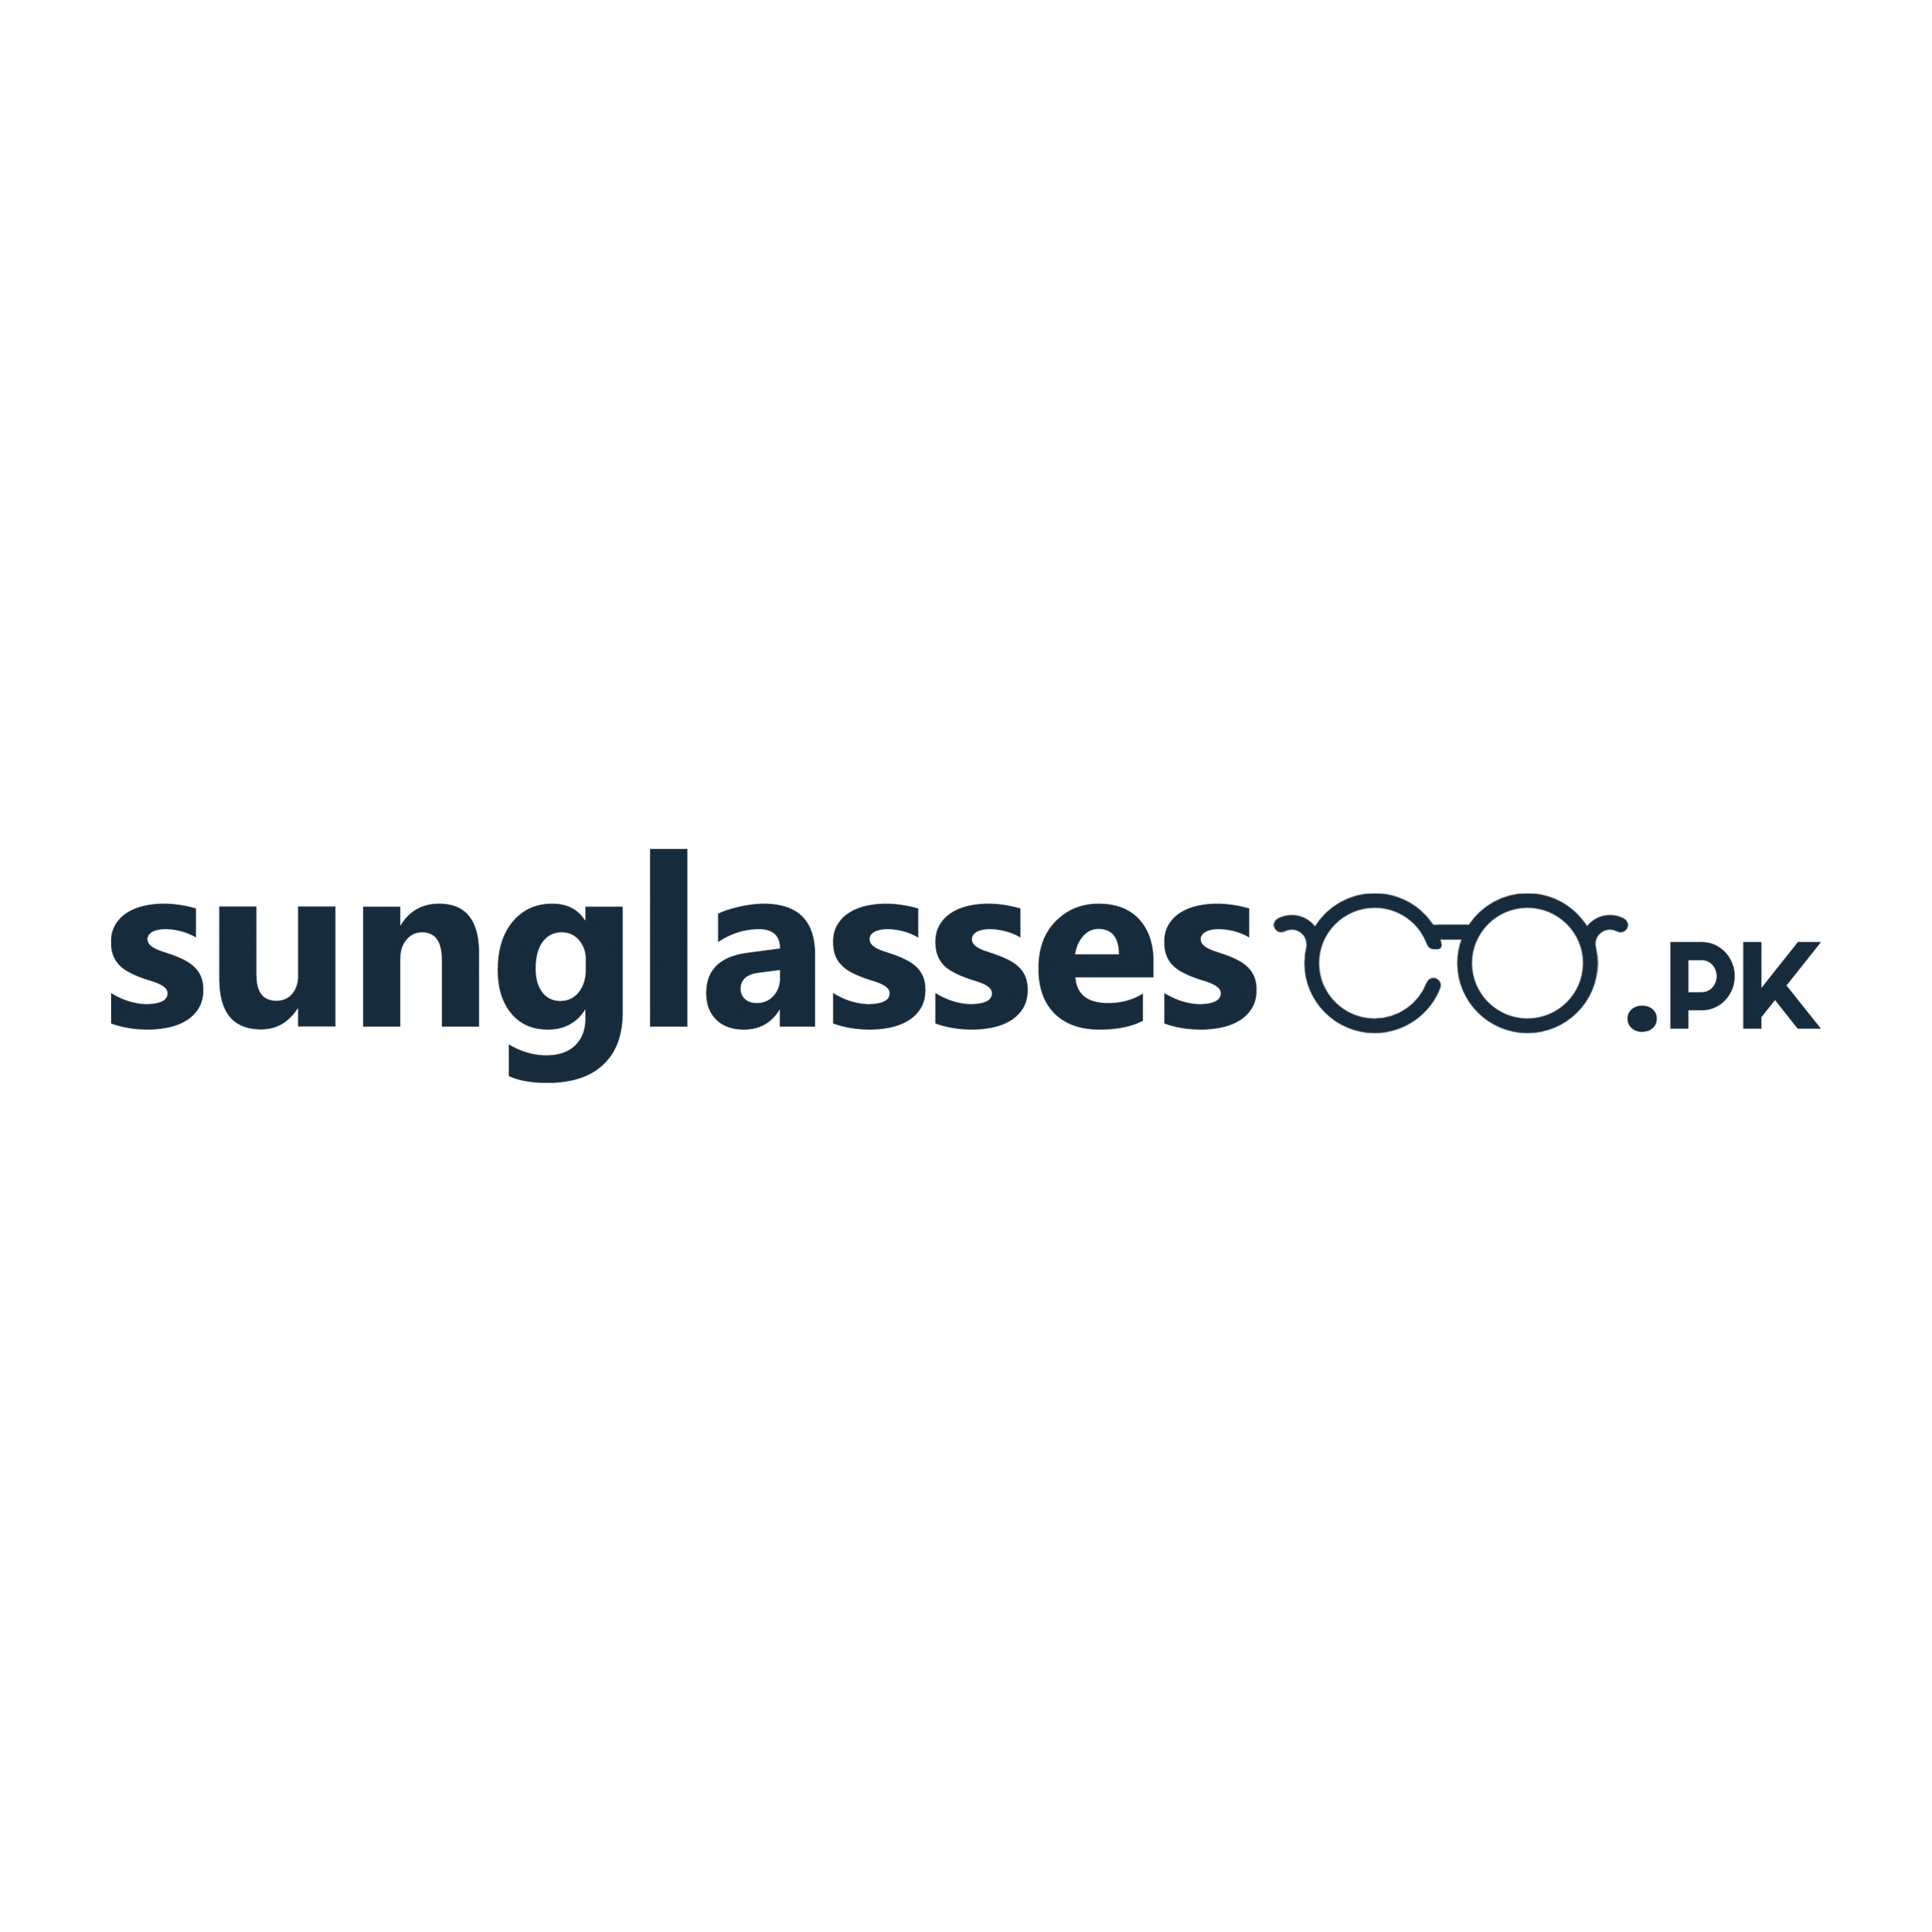 sunglassesco.pk